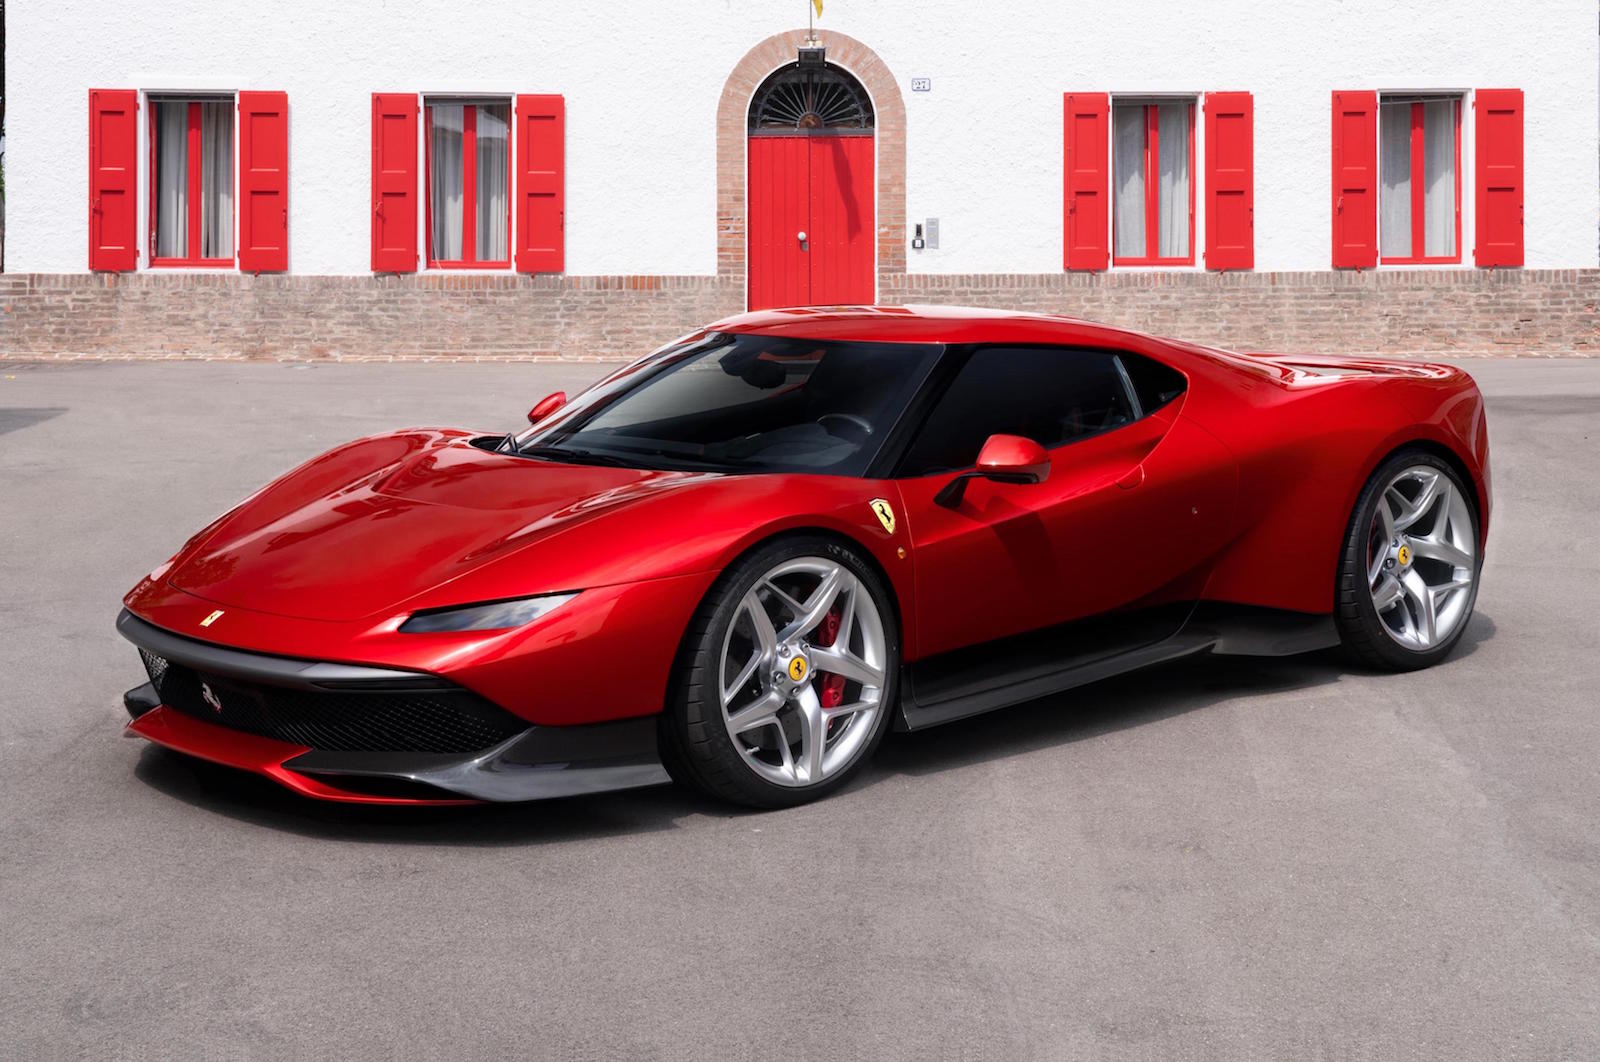 Ferrari reveals stunning 488-based SP38, inspired by F40